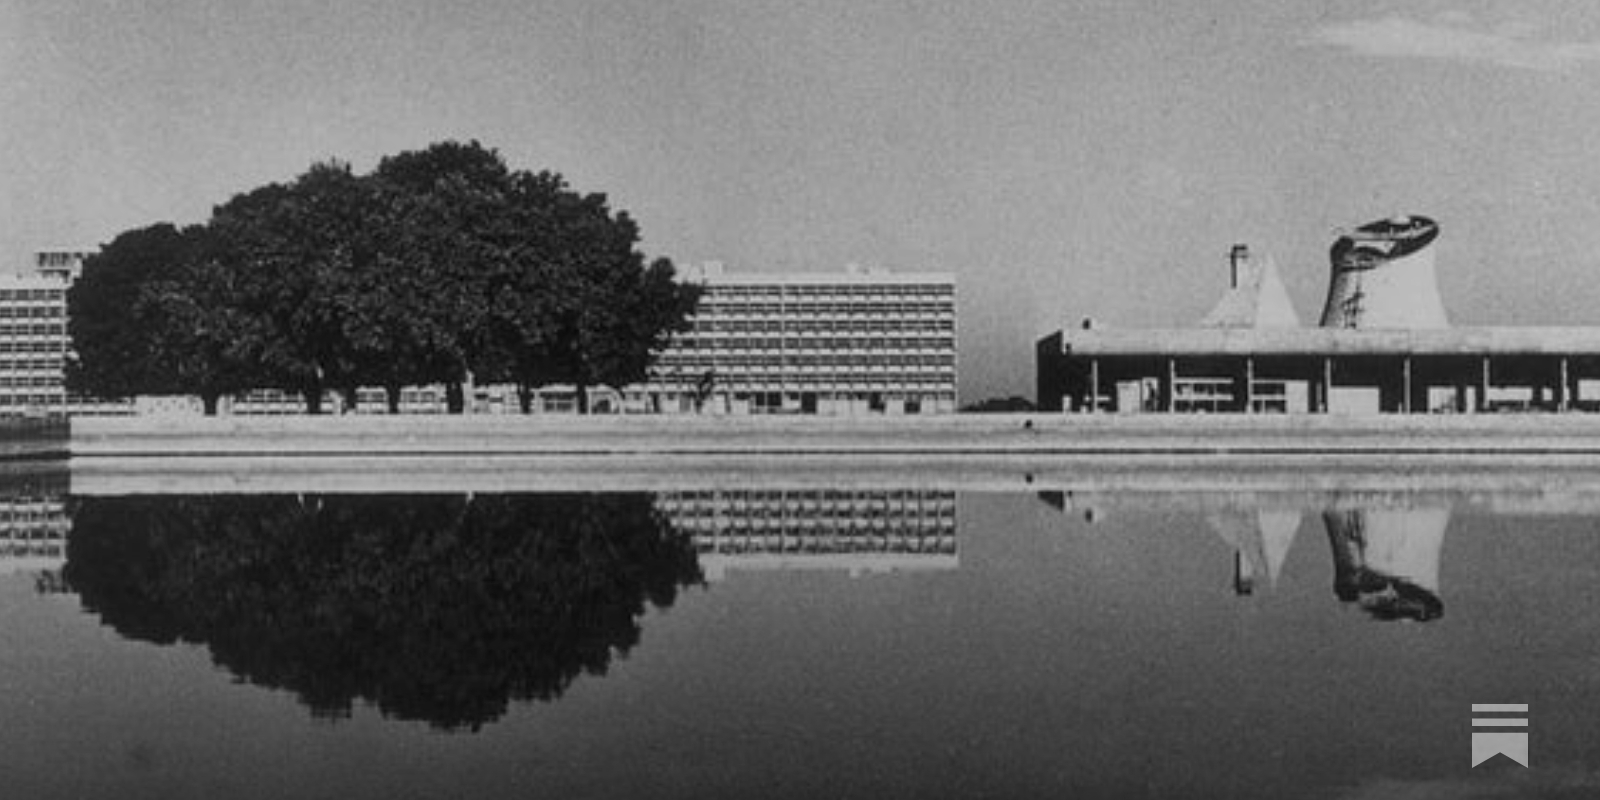 Le Corbusier's Chandigarh - by Mahāvīra Siṅgh